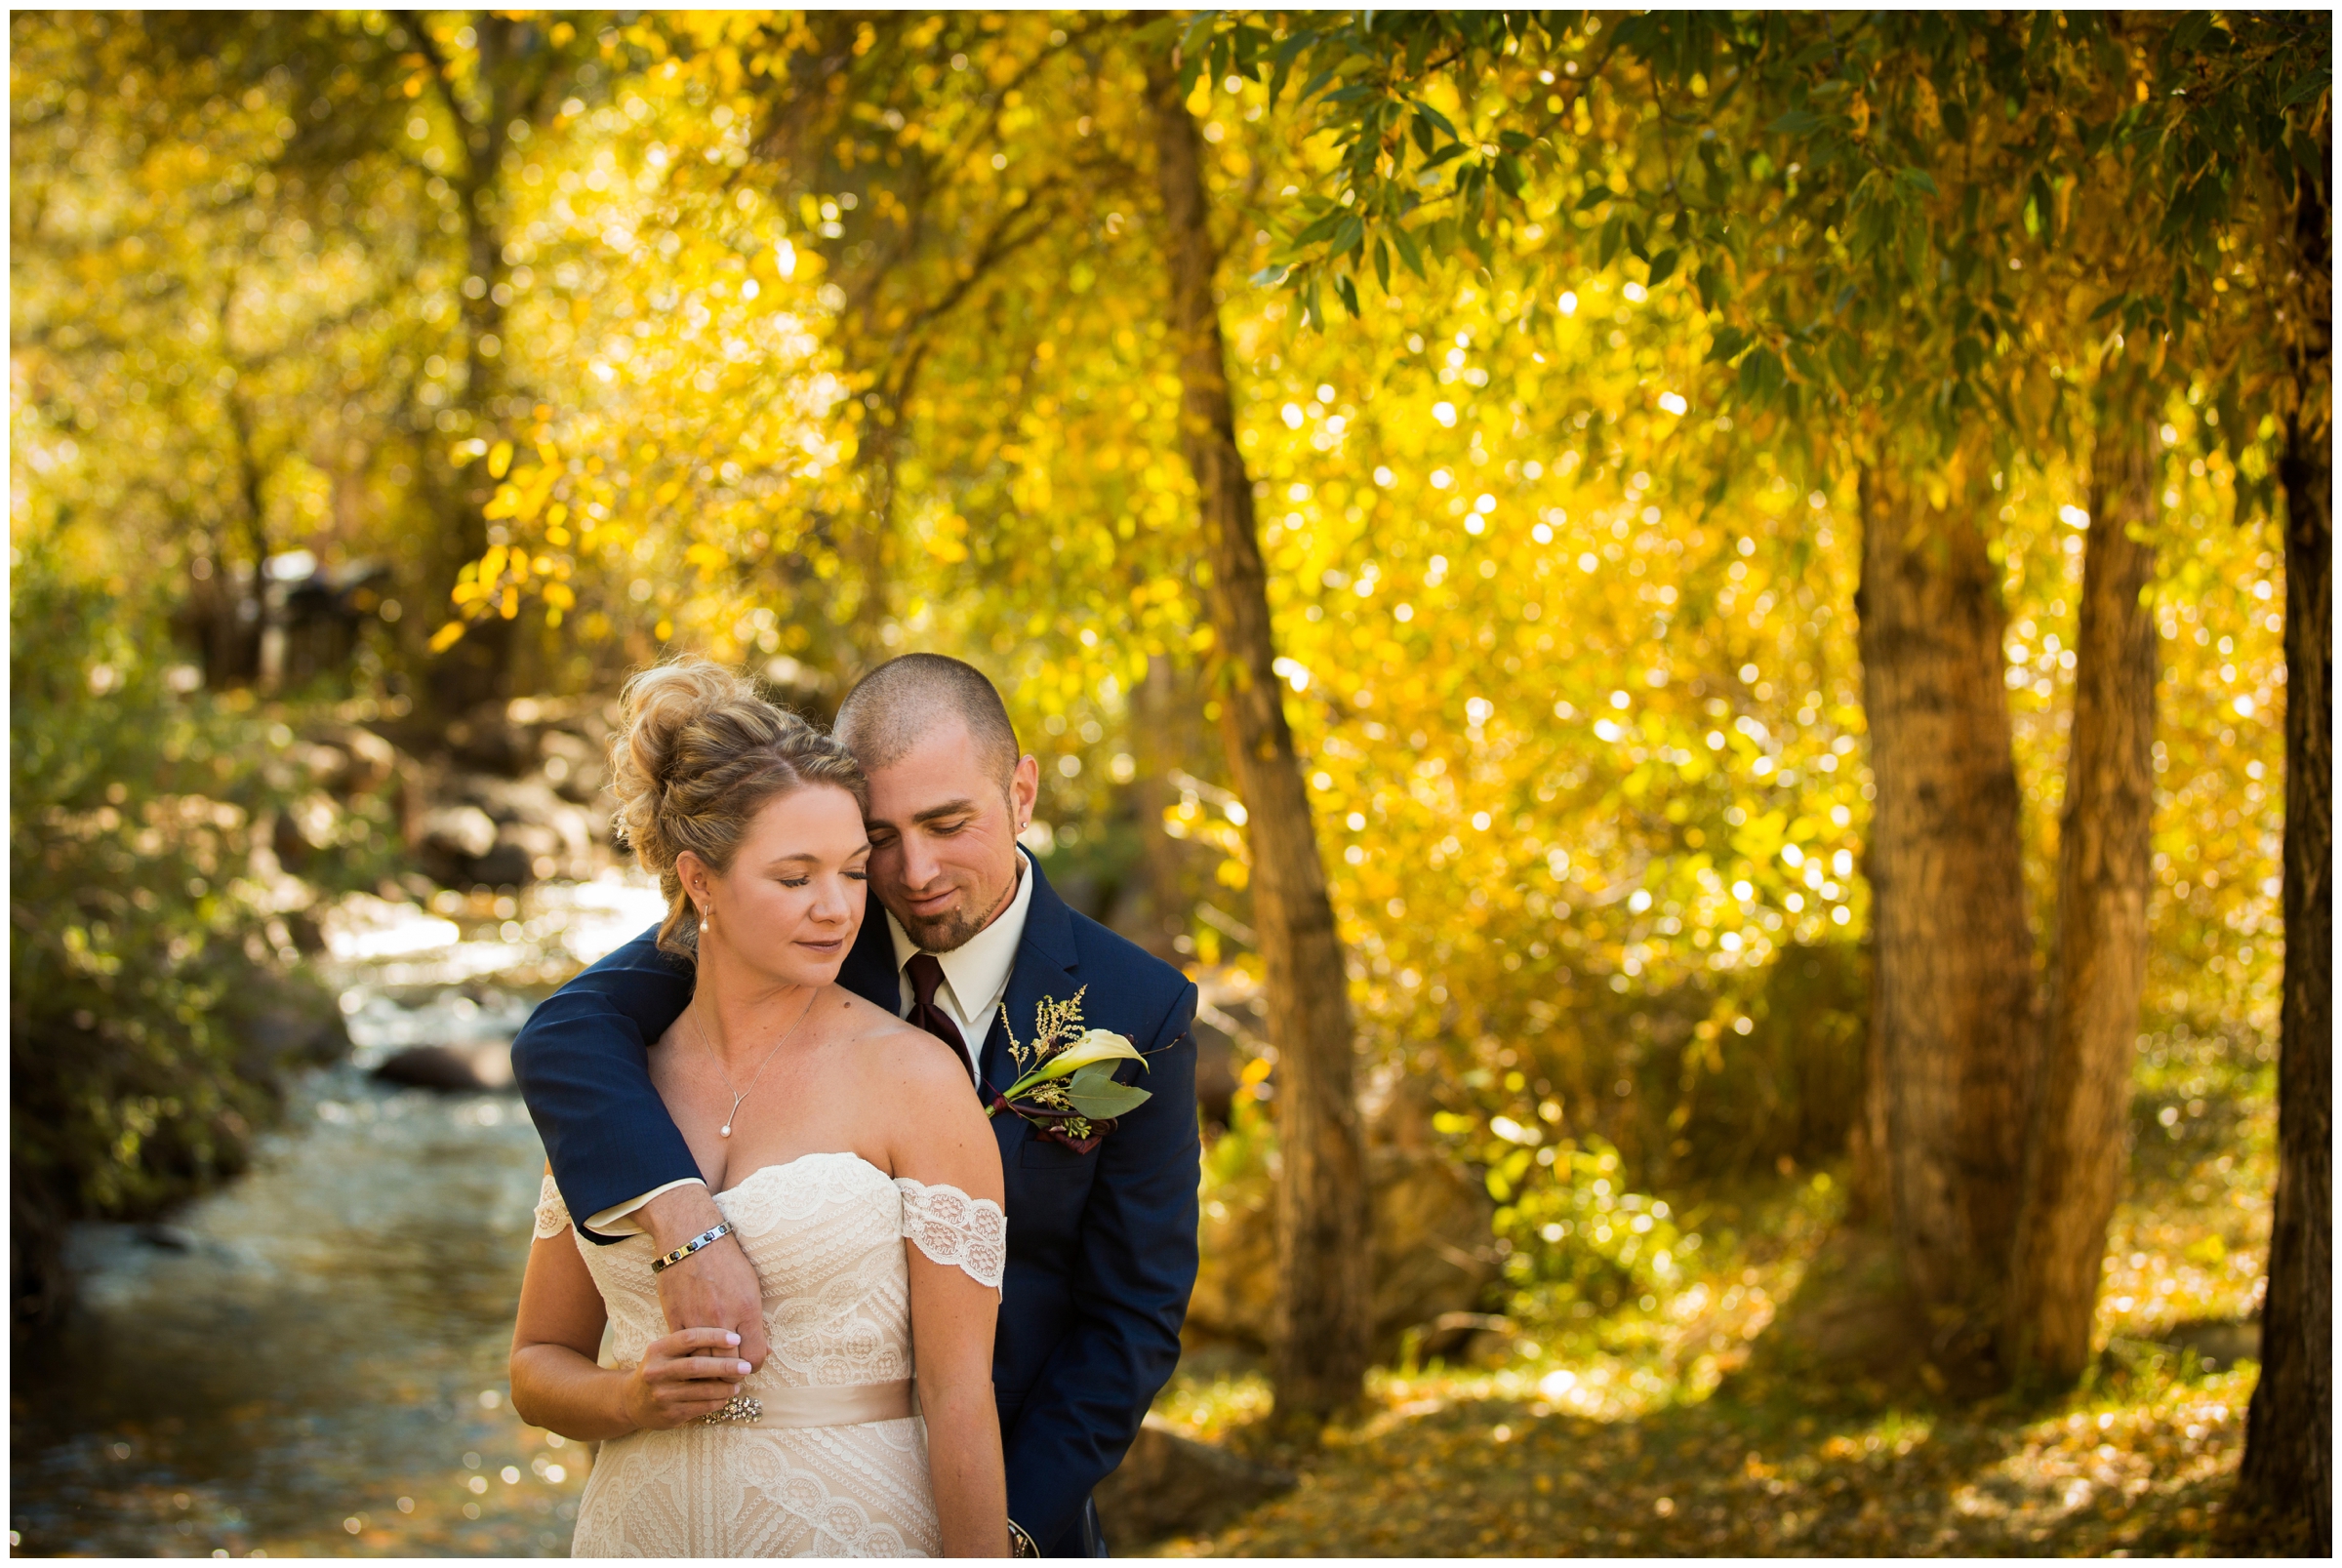 Skyview at Fall River wedding photos by Estes Park Colorado photographer Plum Pretty Photography